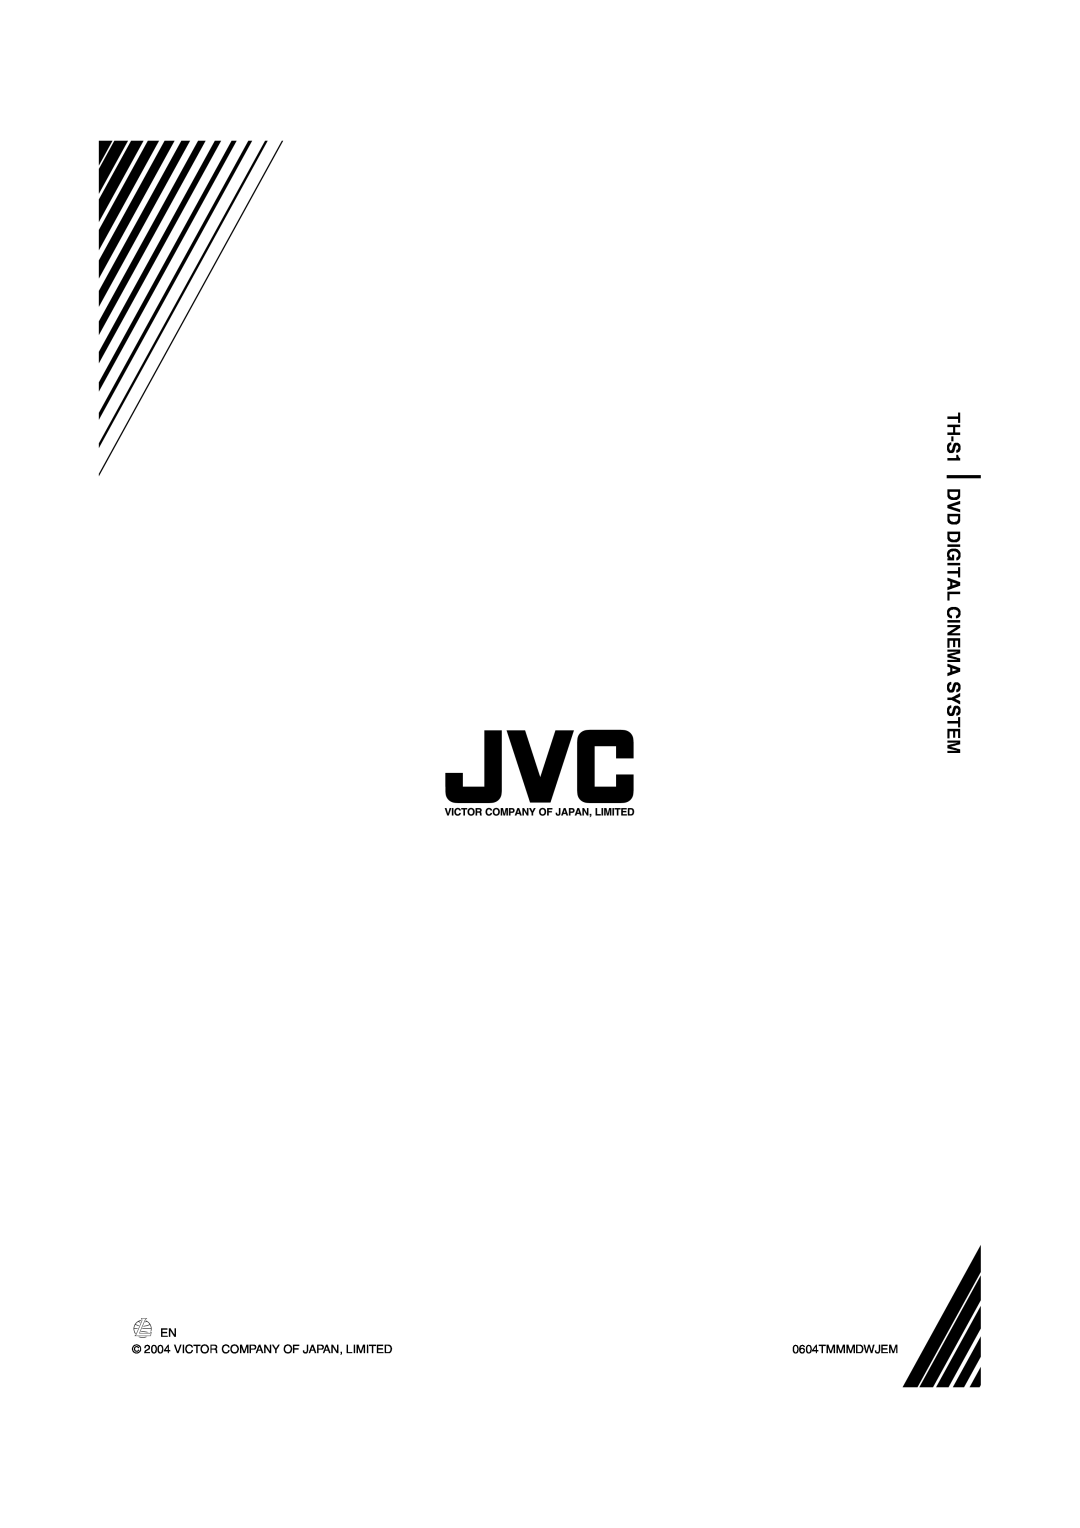 JVC XV-THS1, SP-WS1, SP-THS1S, SP-THS1F manual TH-S1DVD DIGITAL CINEMA SYSTEM, Victor Company Of Japan, Limited, 0604TMMMDWJEM 